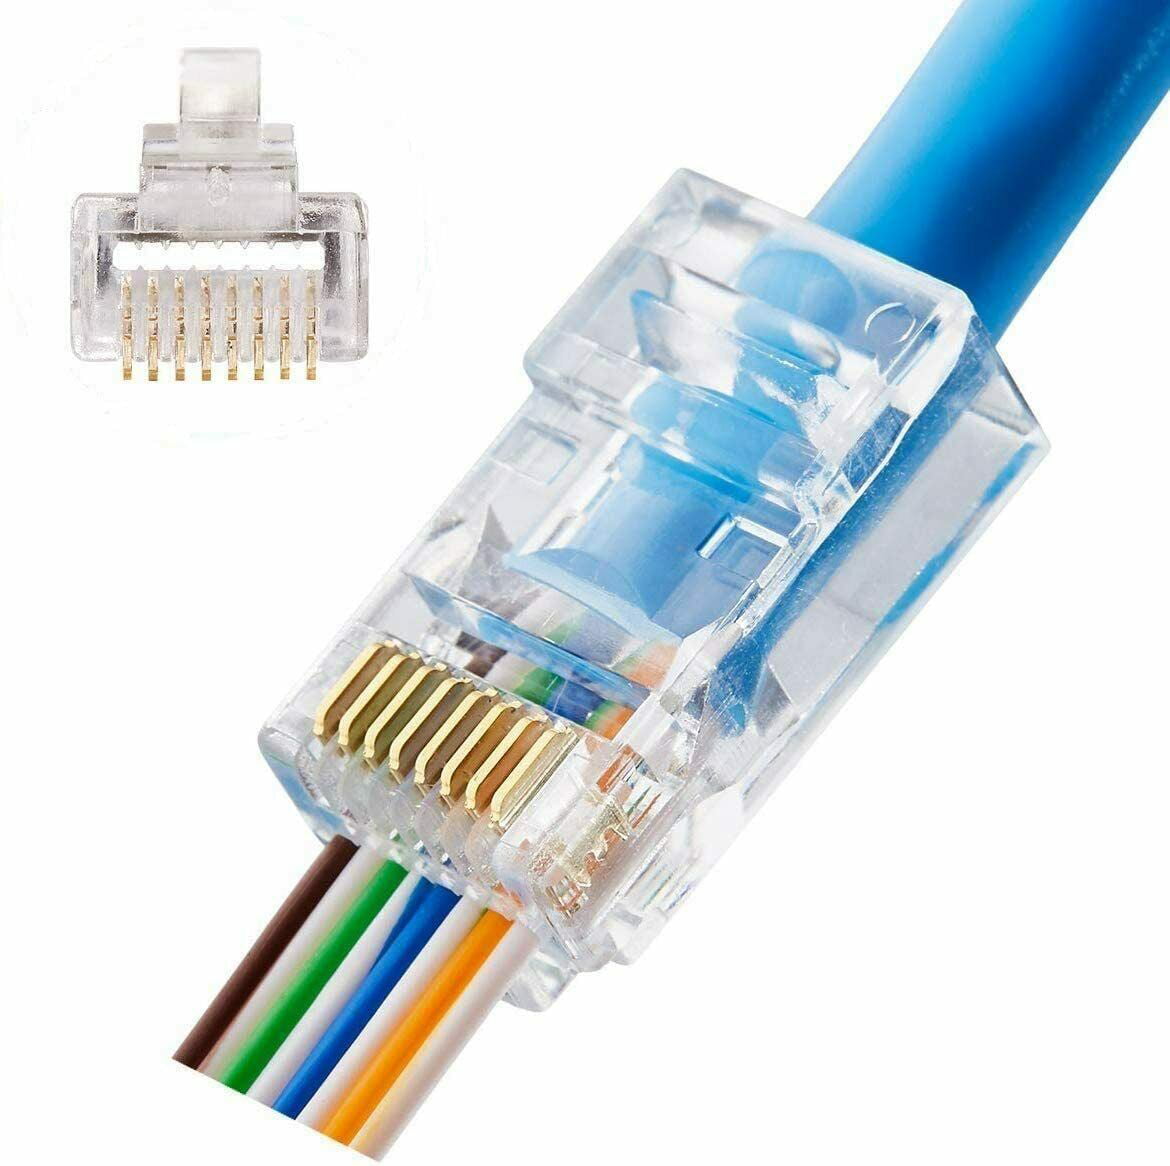 100 Pcs RJ45 Network Cable Modular Plug CAT6 8P8C Connector End Pass Through 